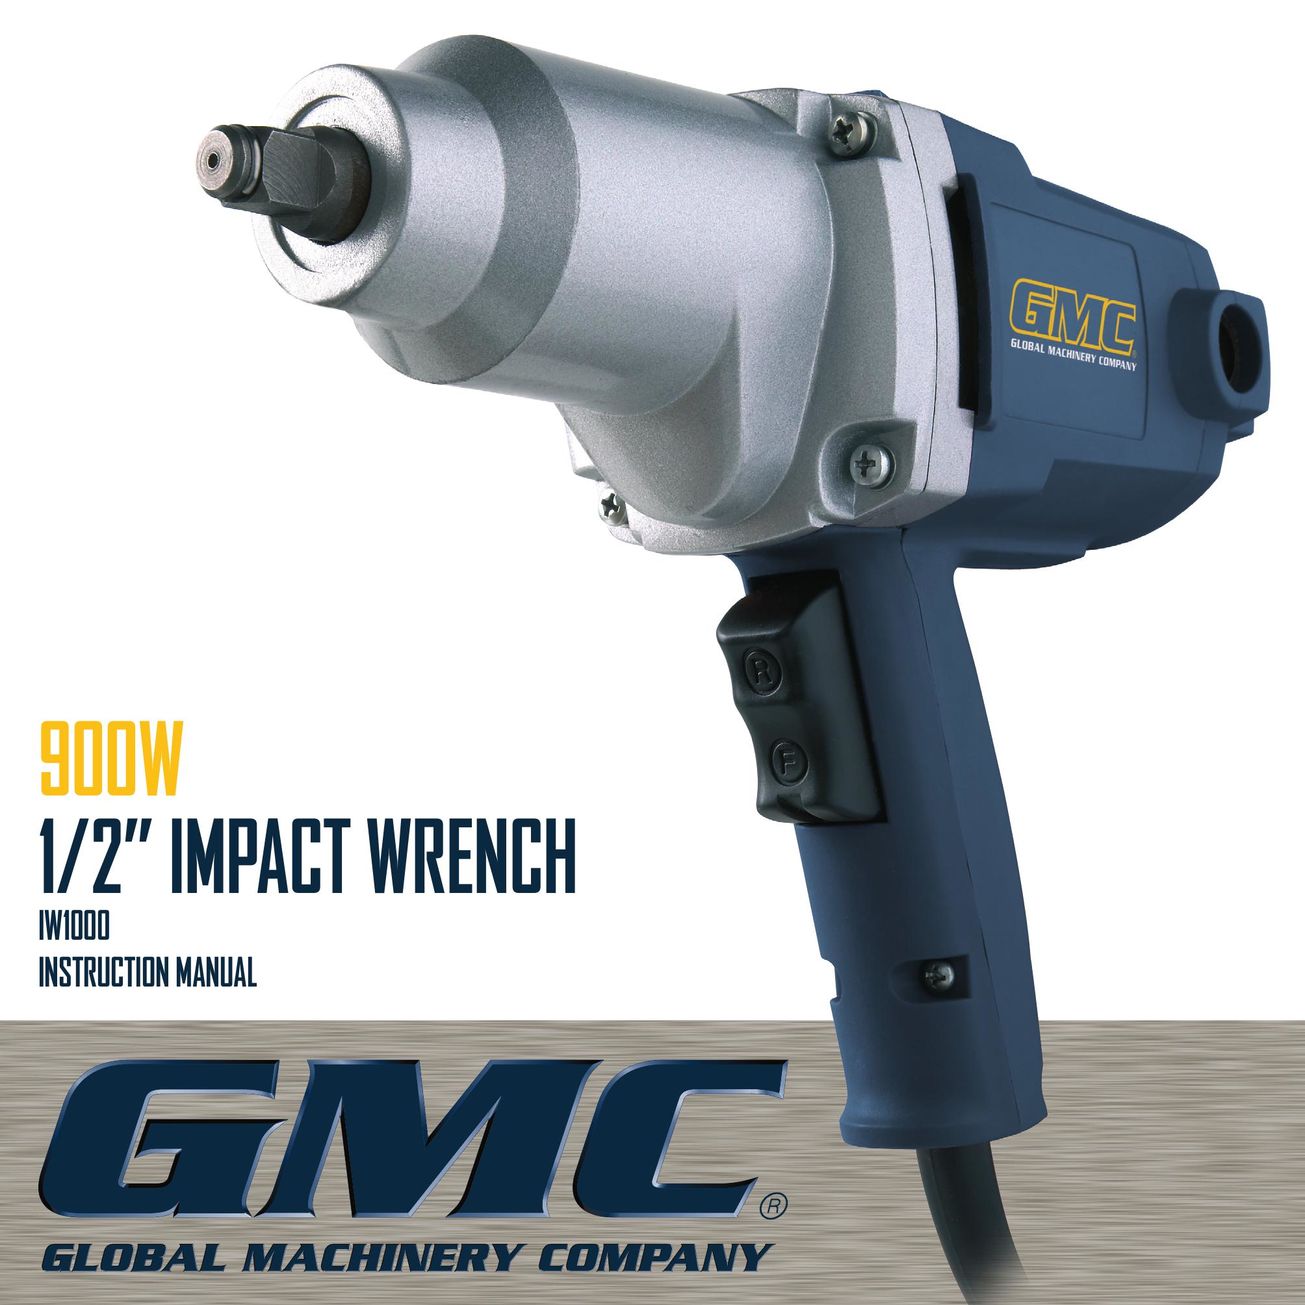 Global Machinery Company IW1000 Impact Driver User Manual